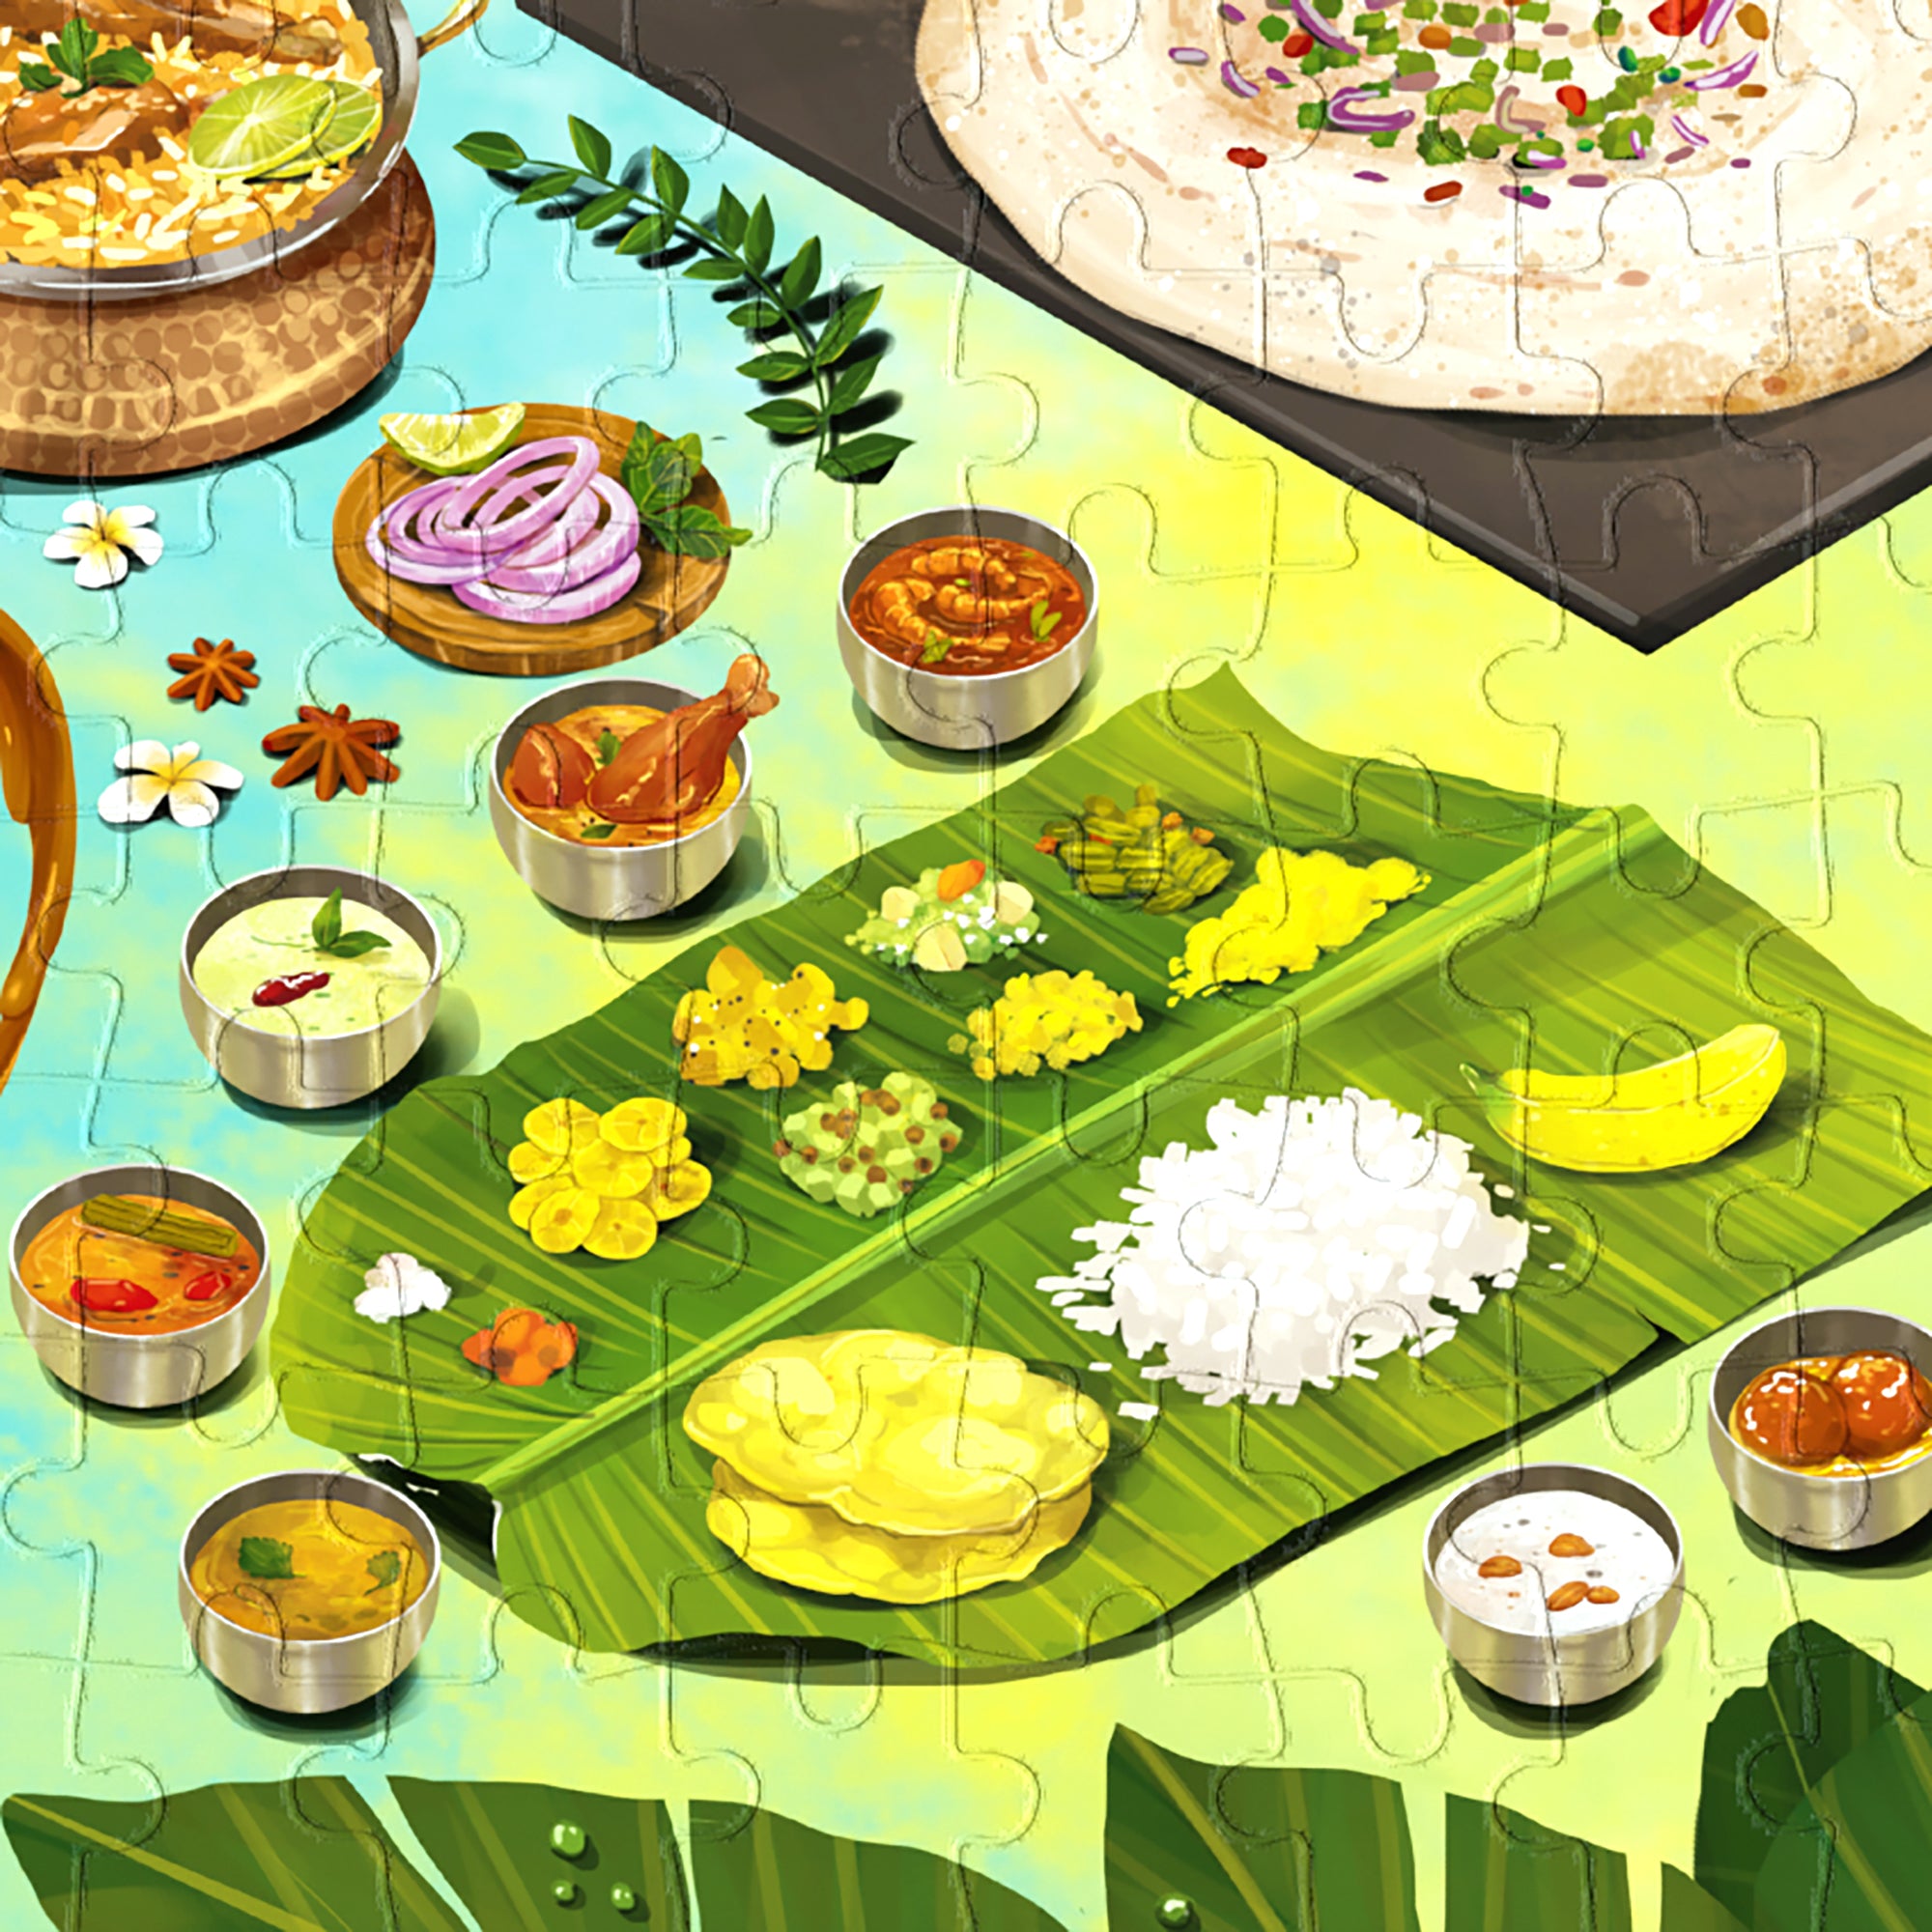 Melting Pot - South Indian Gastronomy